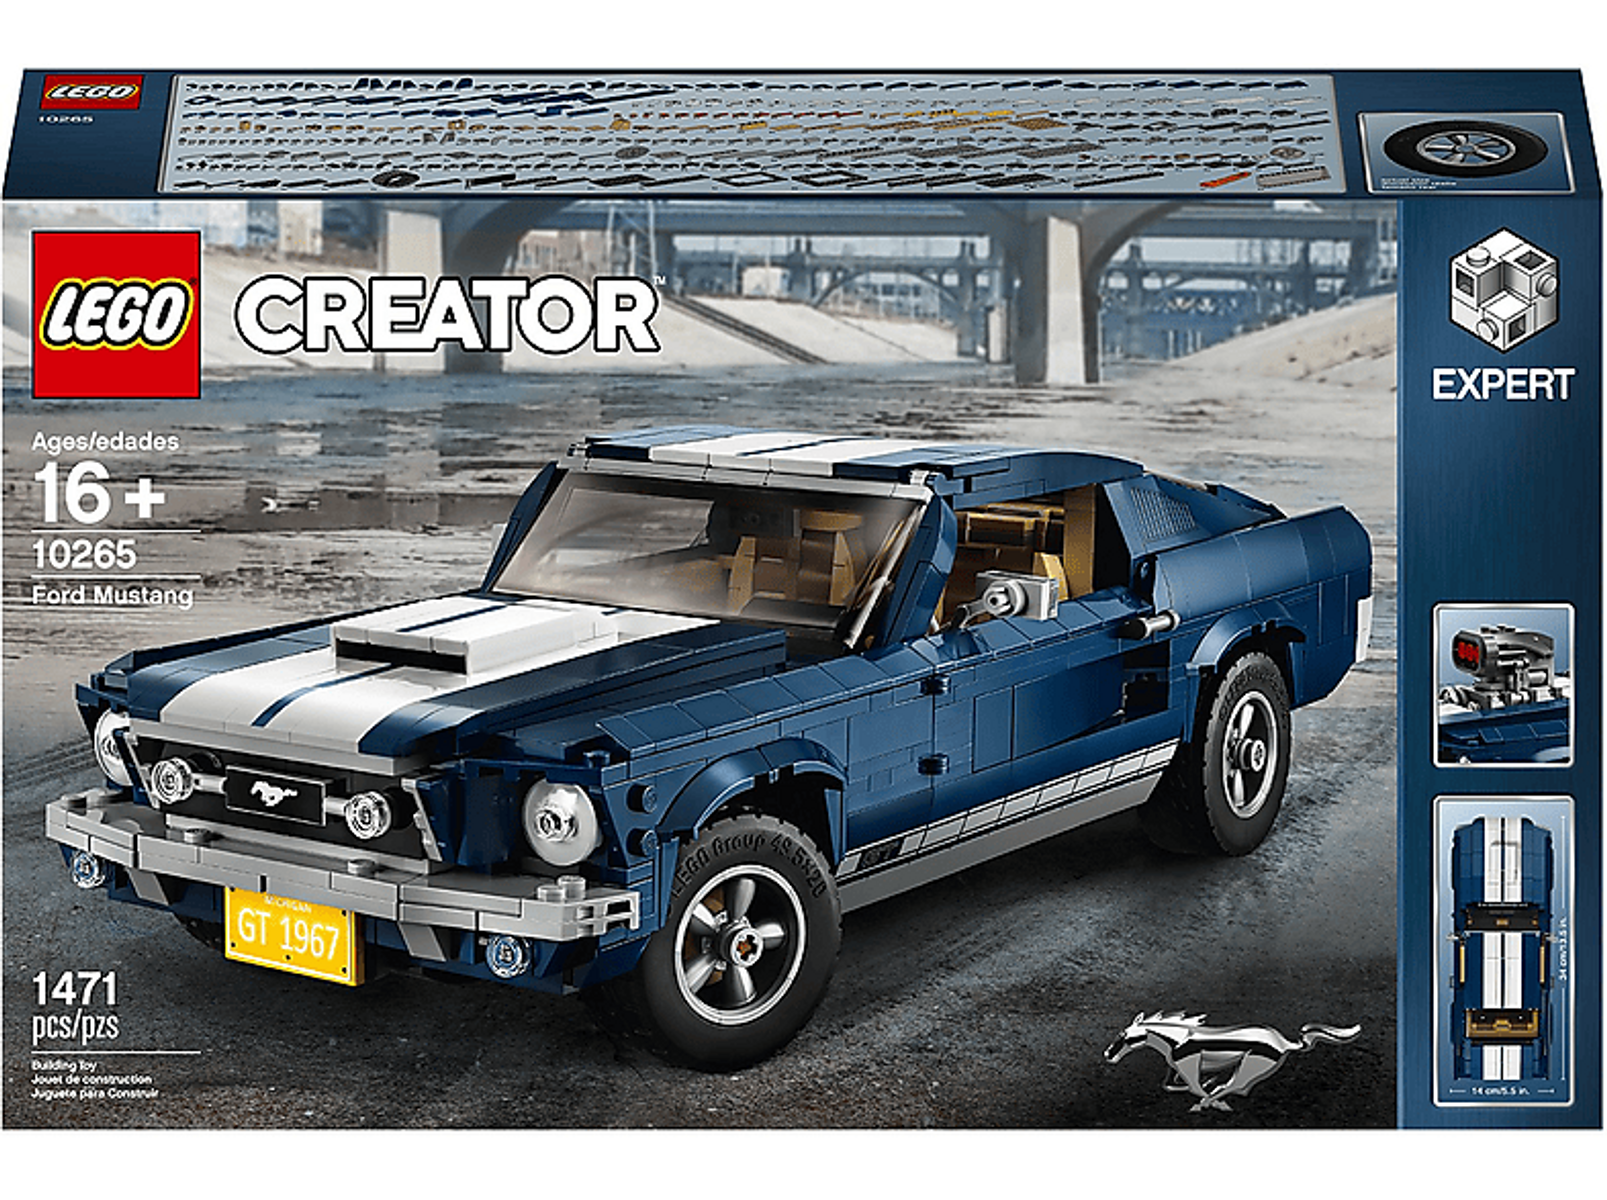 10265 SOP LEGO Bausatz LEGO Mehrfarbig Expert Mustang Ford Creator